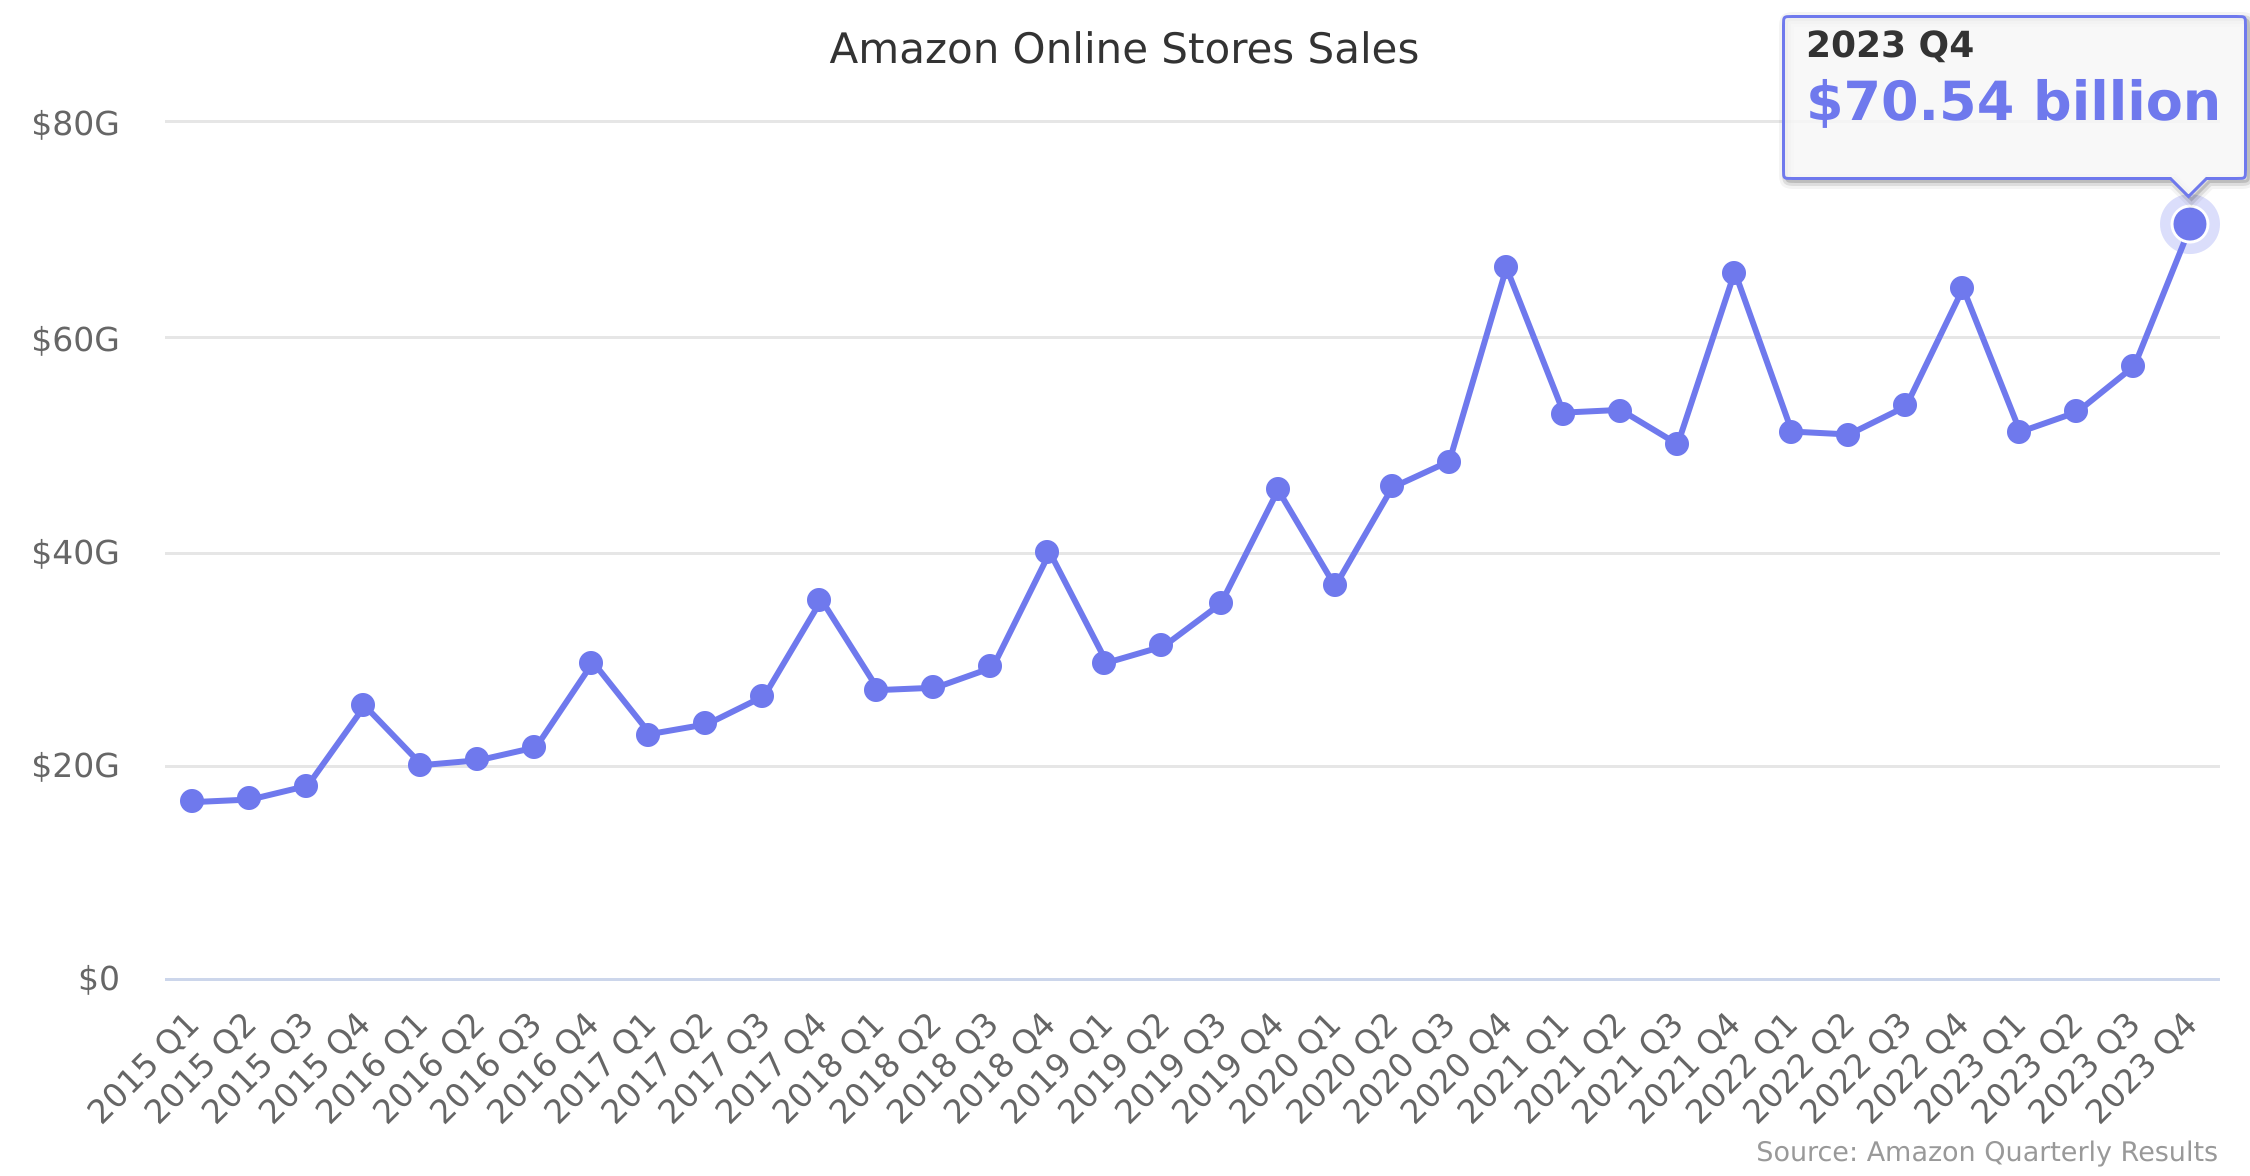 Amazon Online Stores Sales 2015-2023